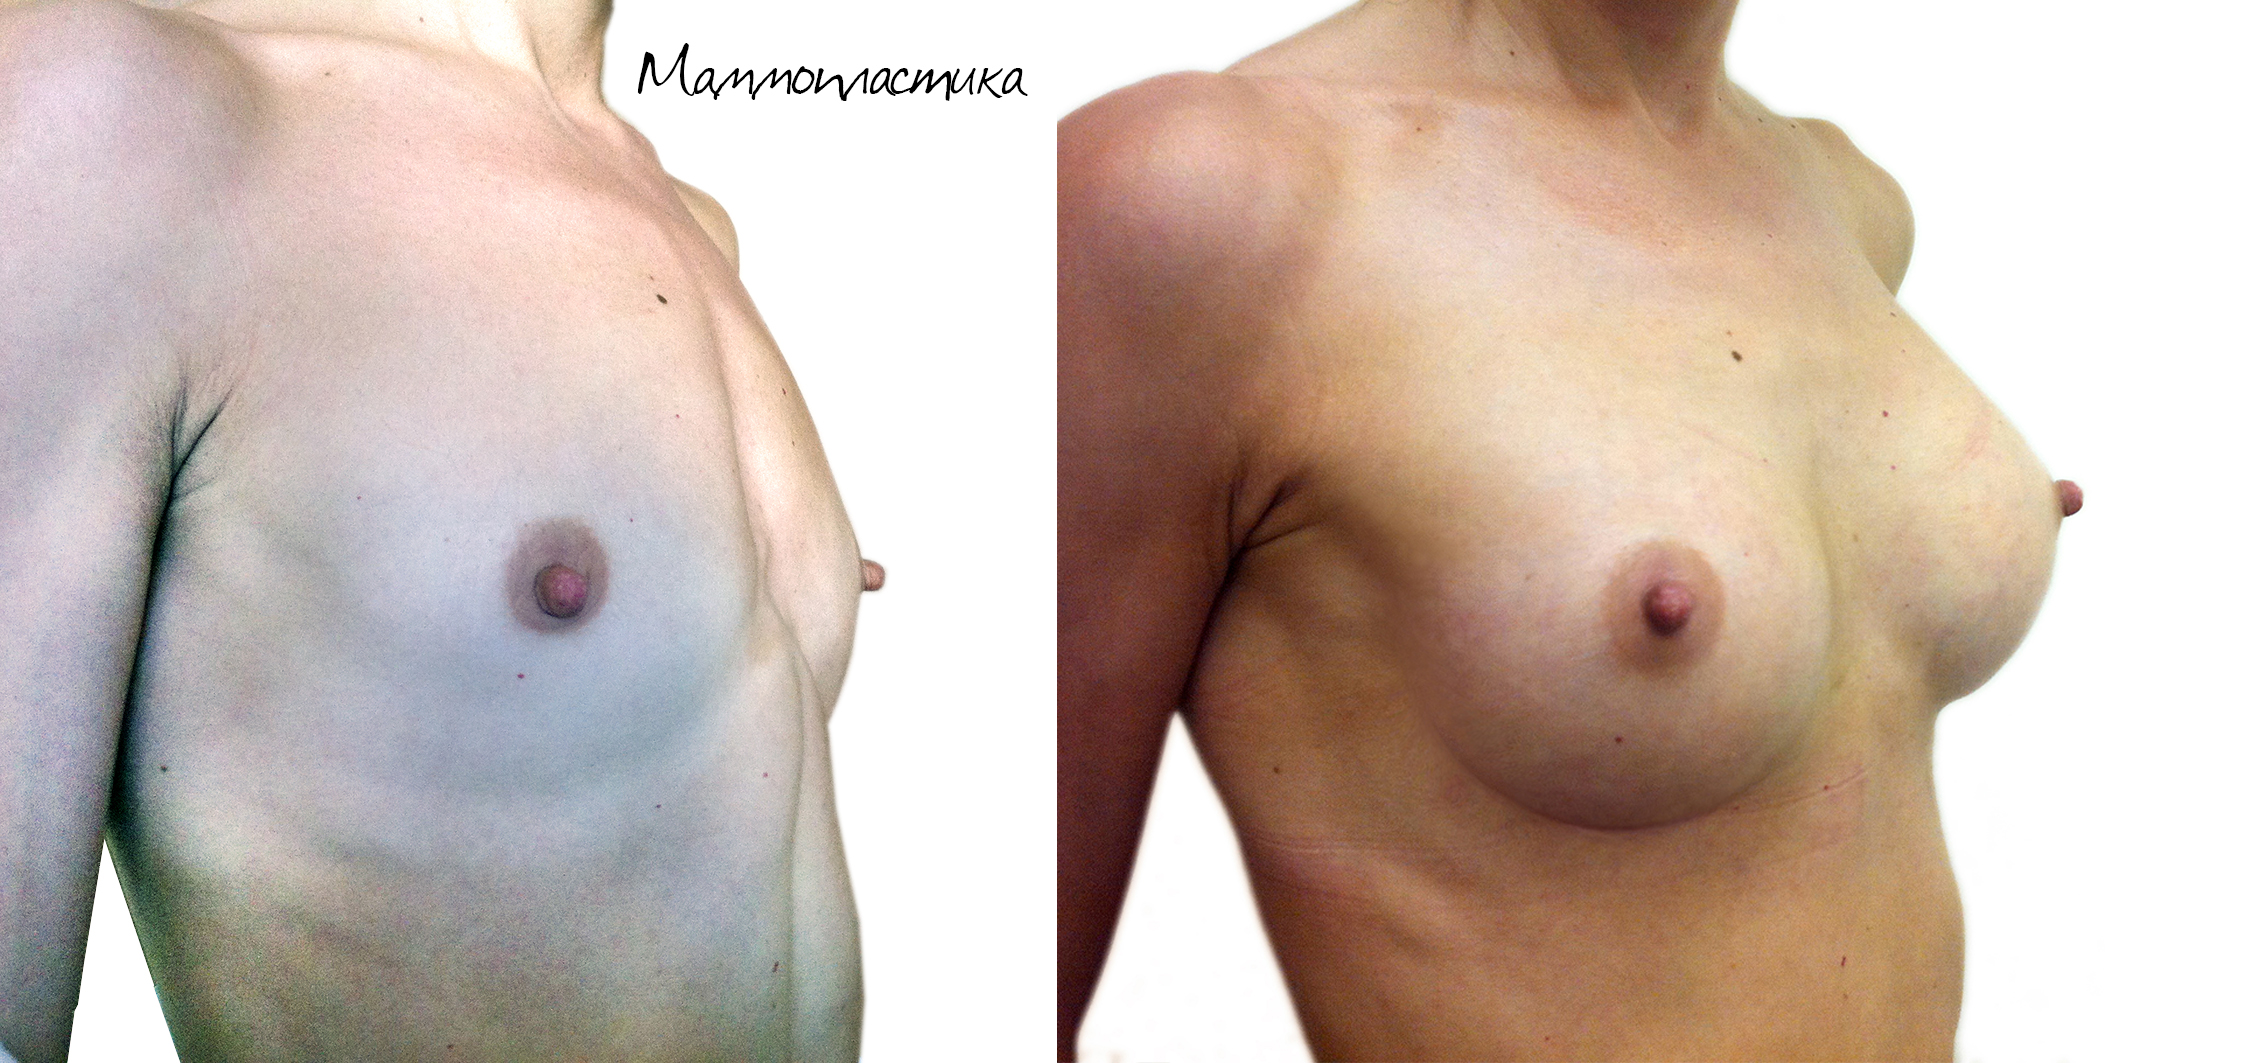 тубулярная форма груди у женщин фото 102